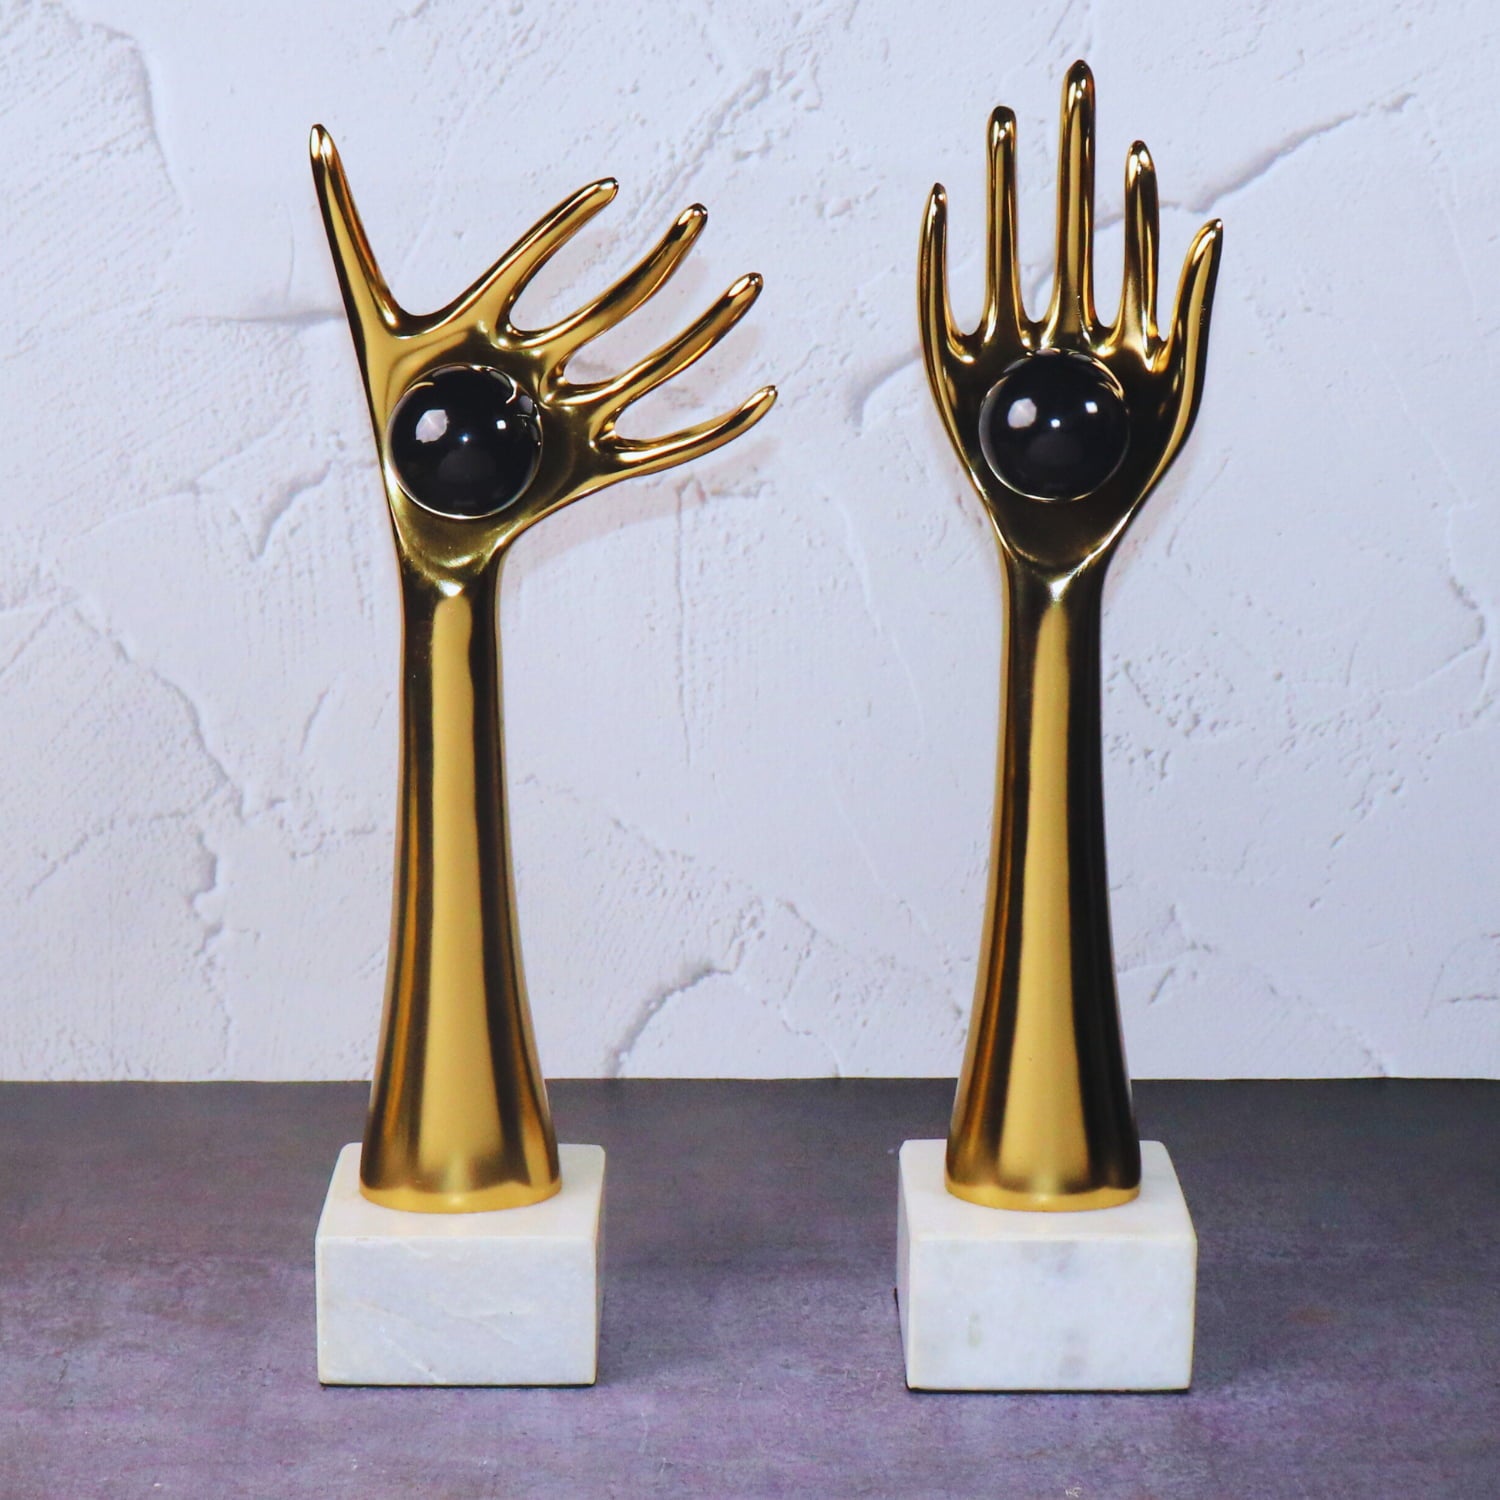 The Golden auspicious hands holding balls in aluminum set of 2